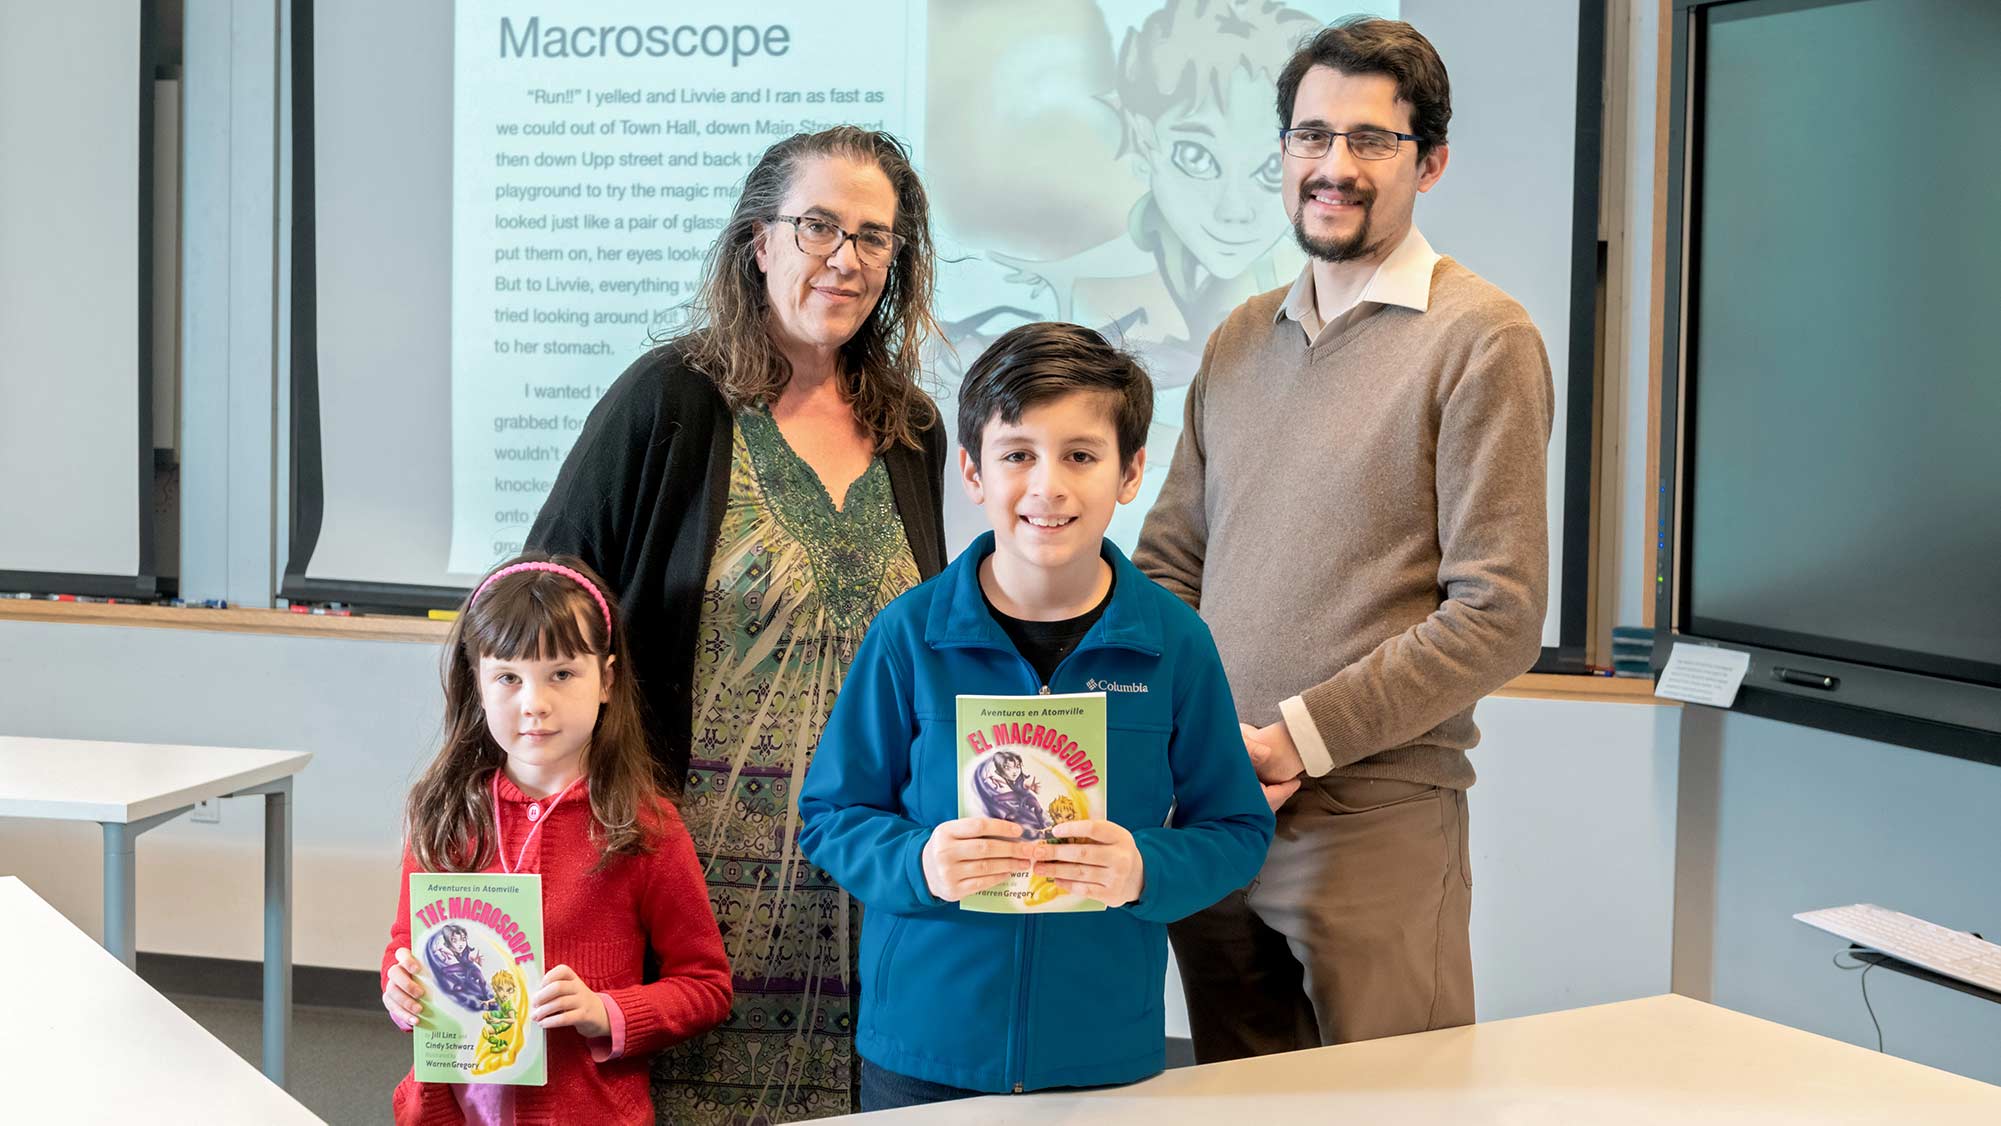 Physics Faculty Duo Creates Bilingual Children’s Books